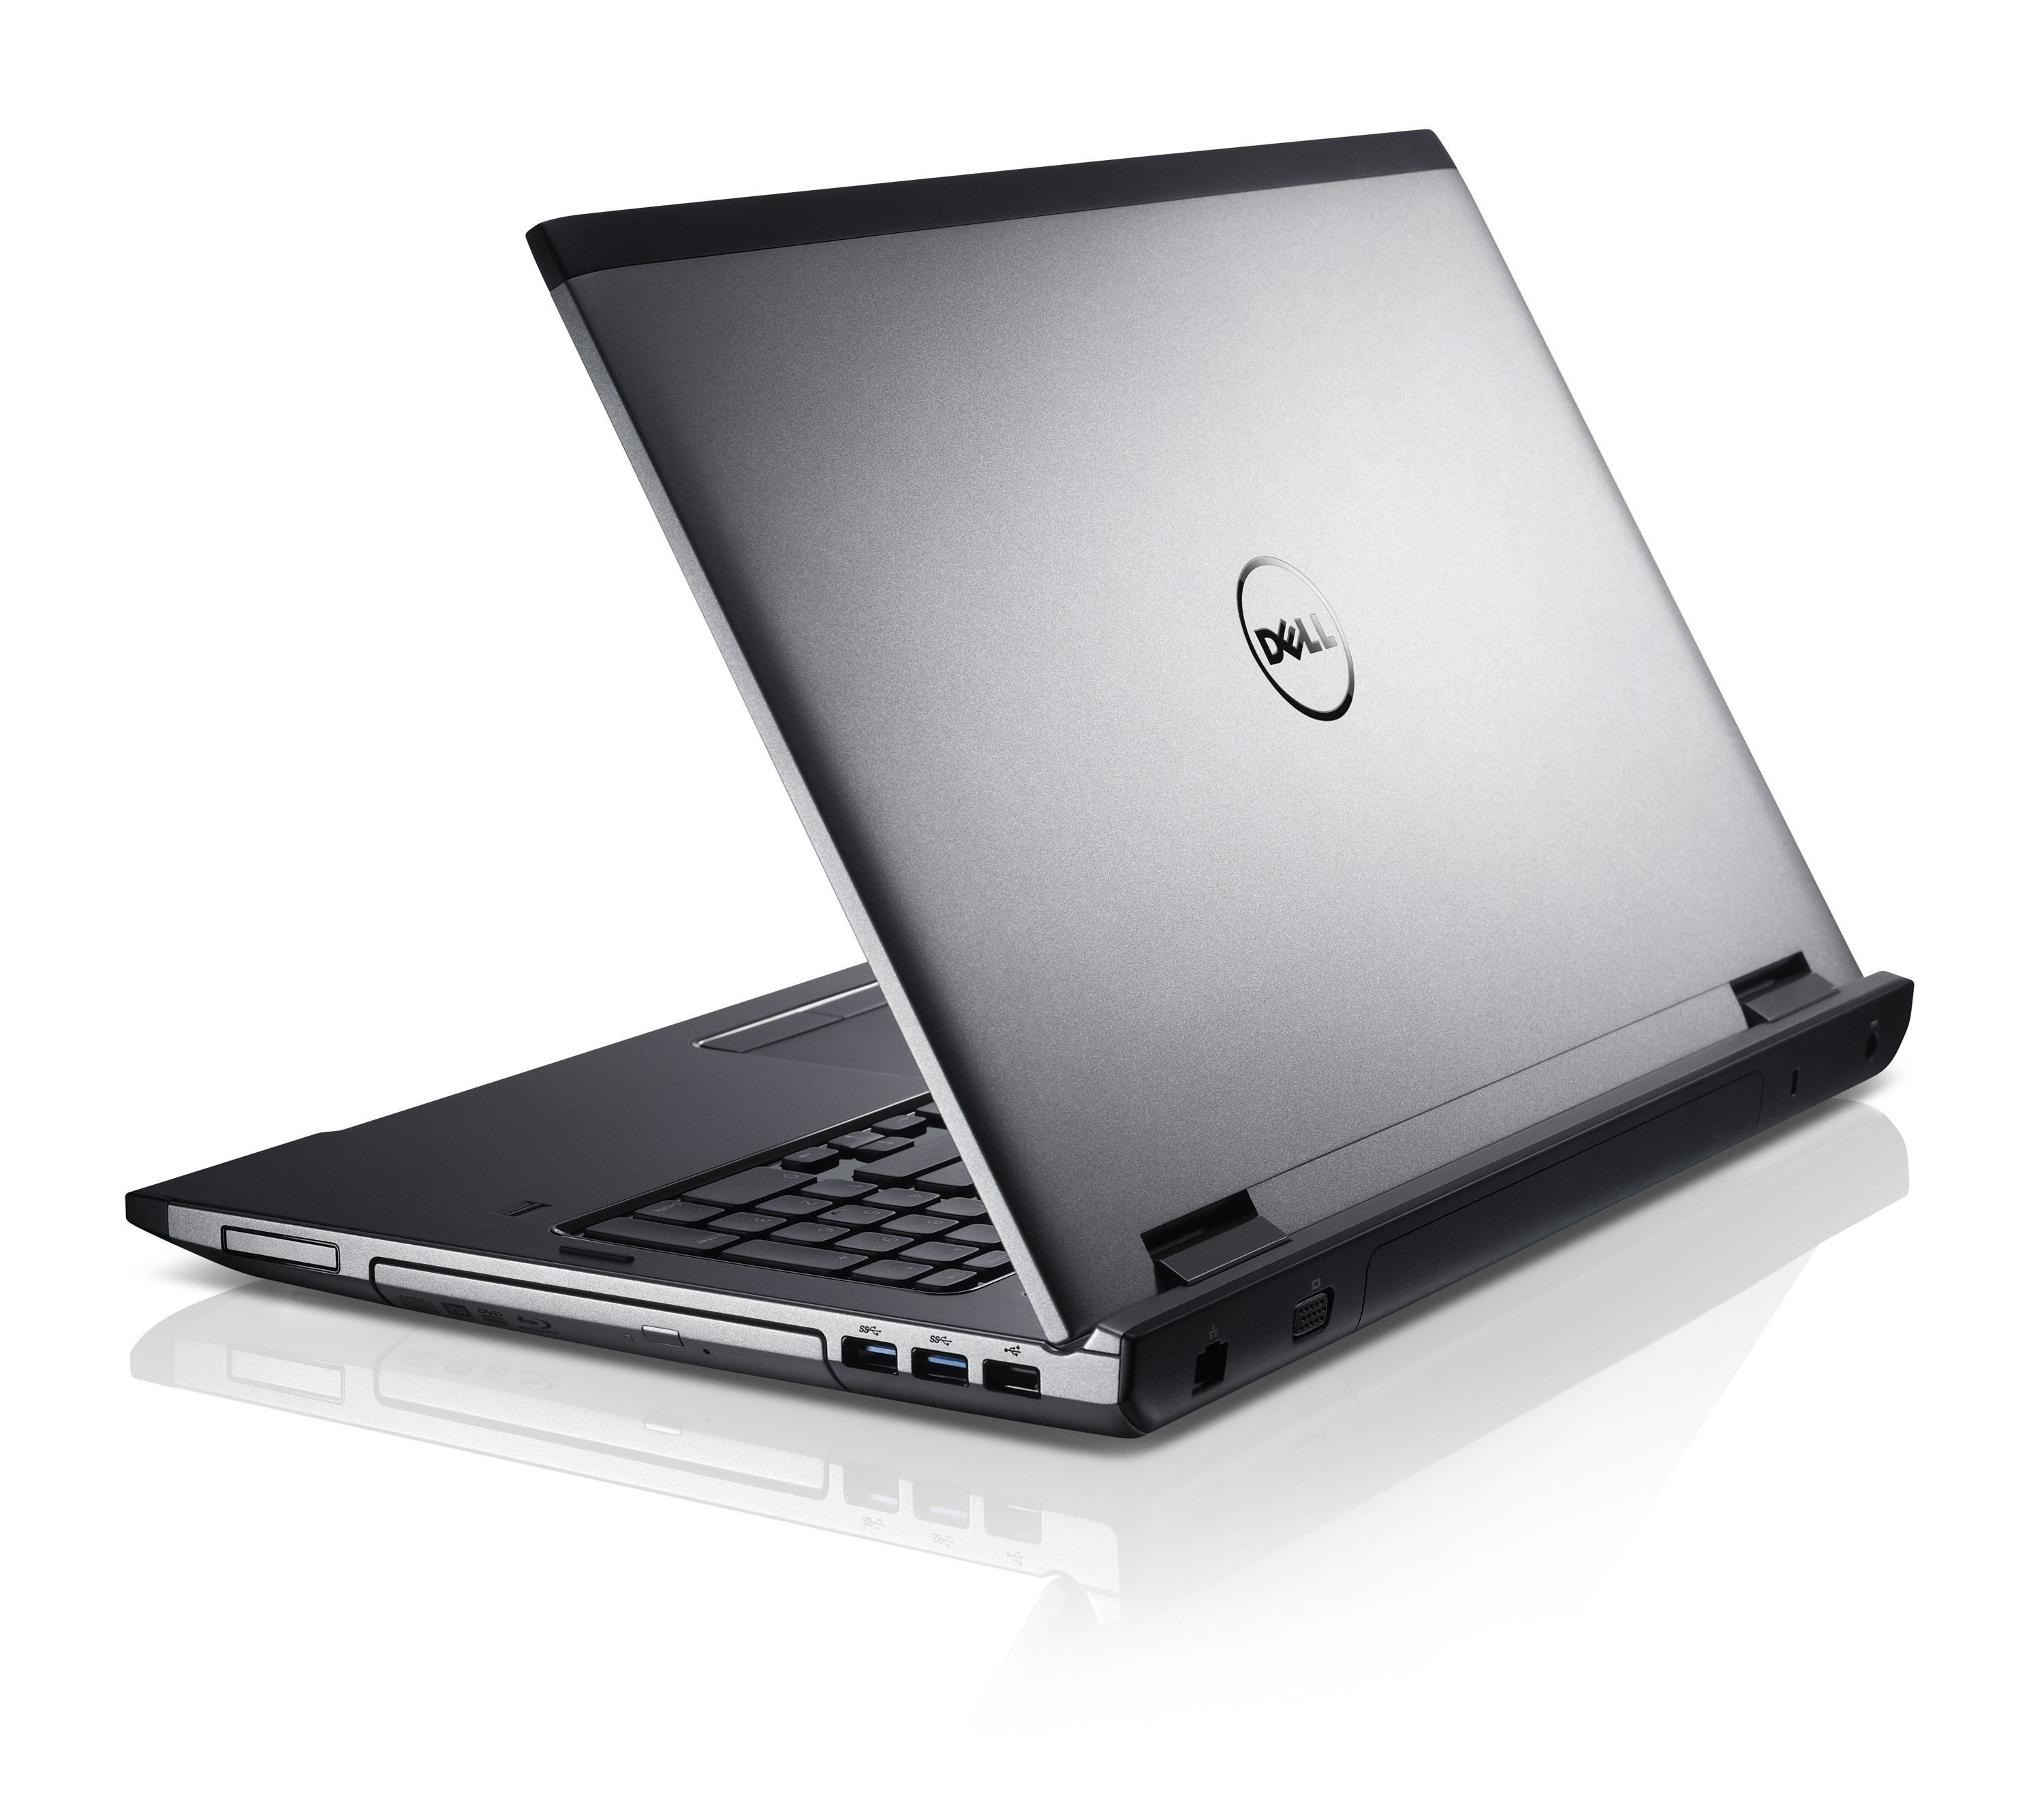 Dell updates Vostro 3000 laptops too